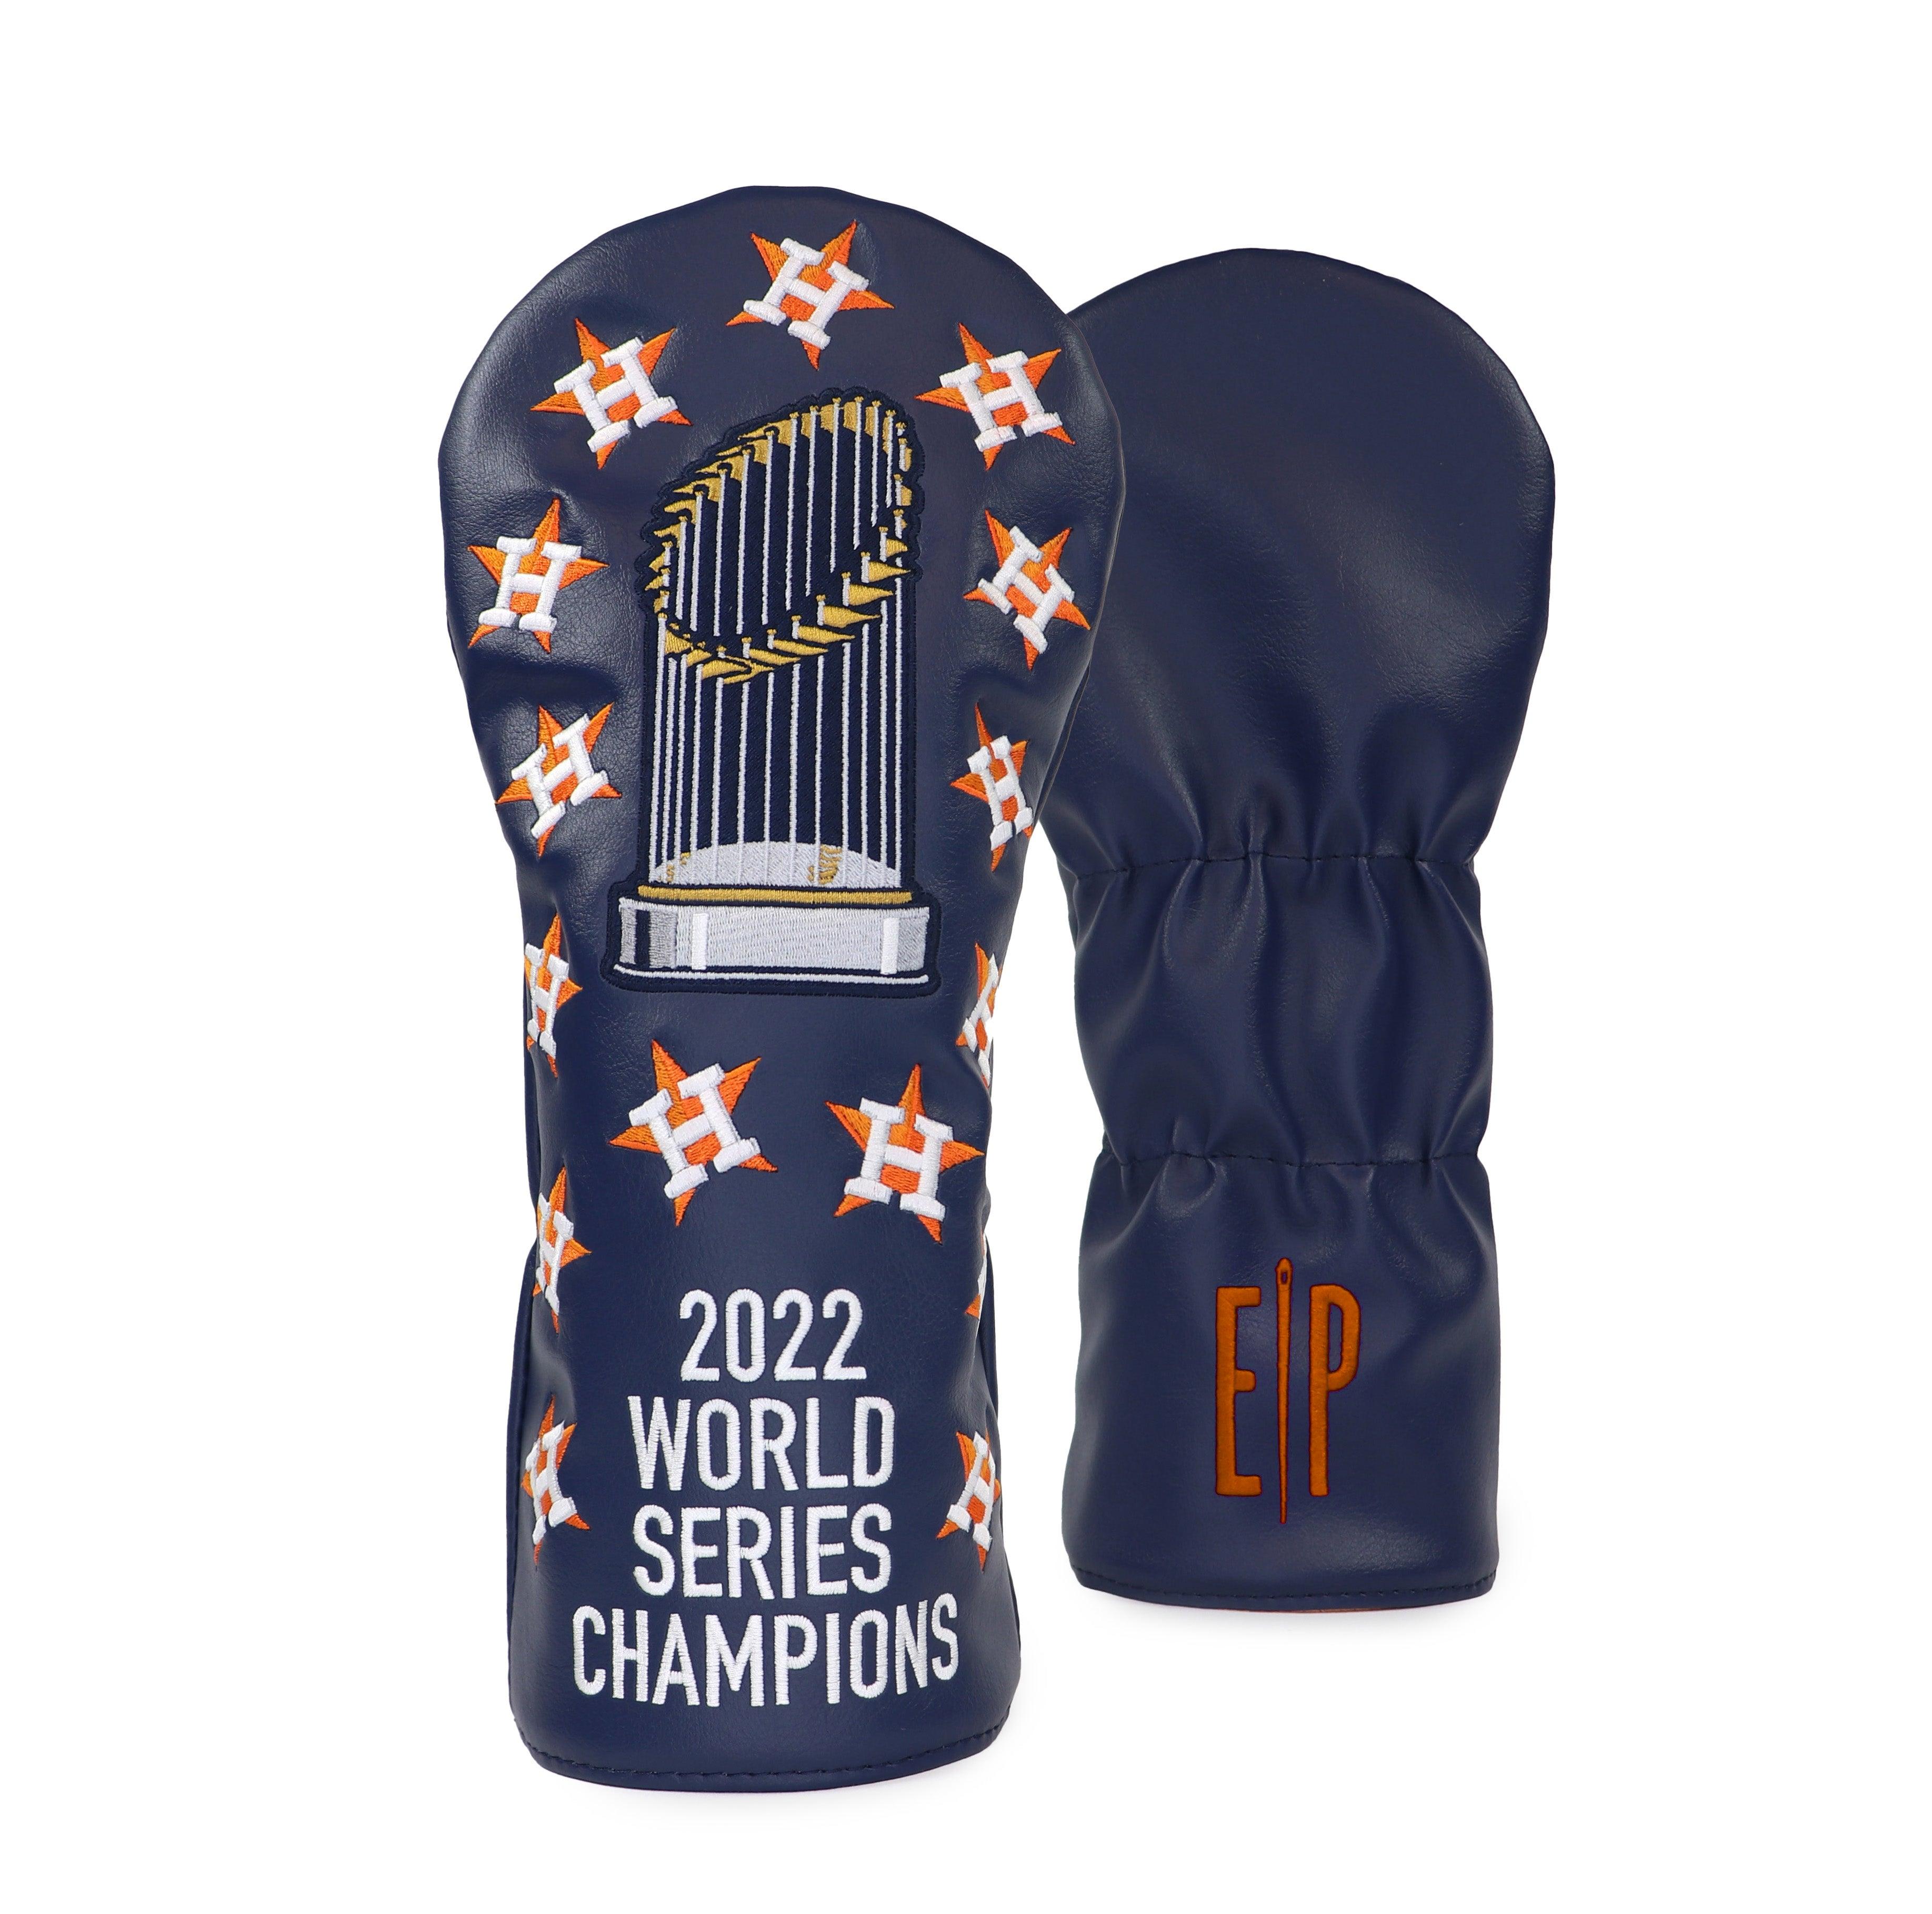 Mlb Merch World Series Champions 2022 Houston Astros T-Shirt